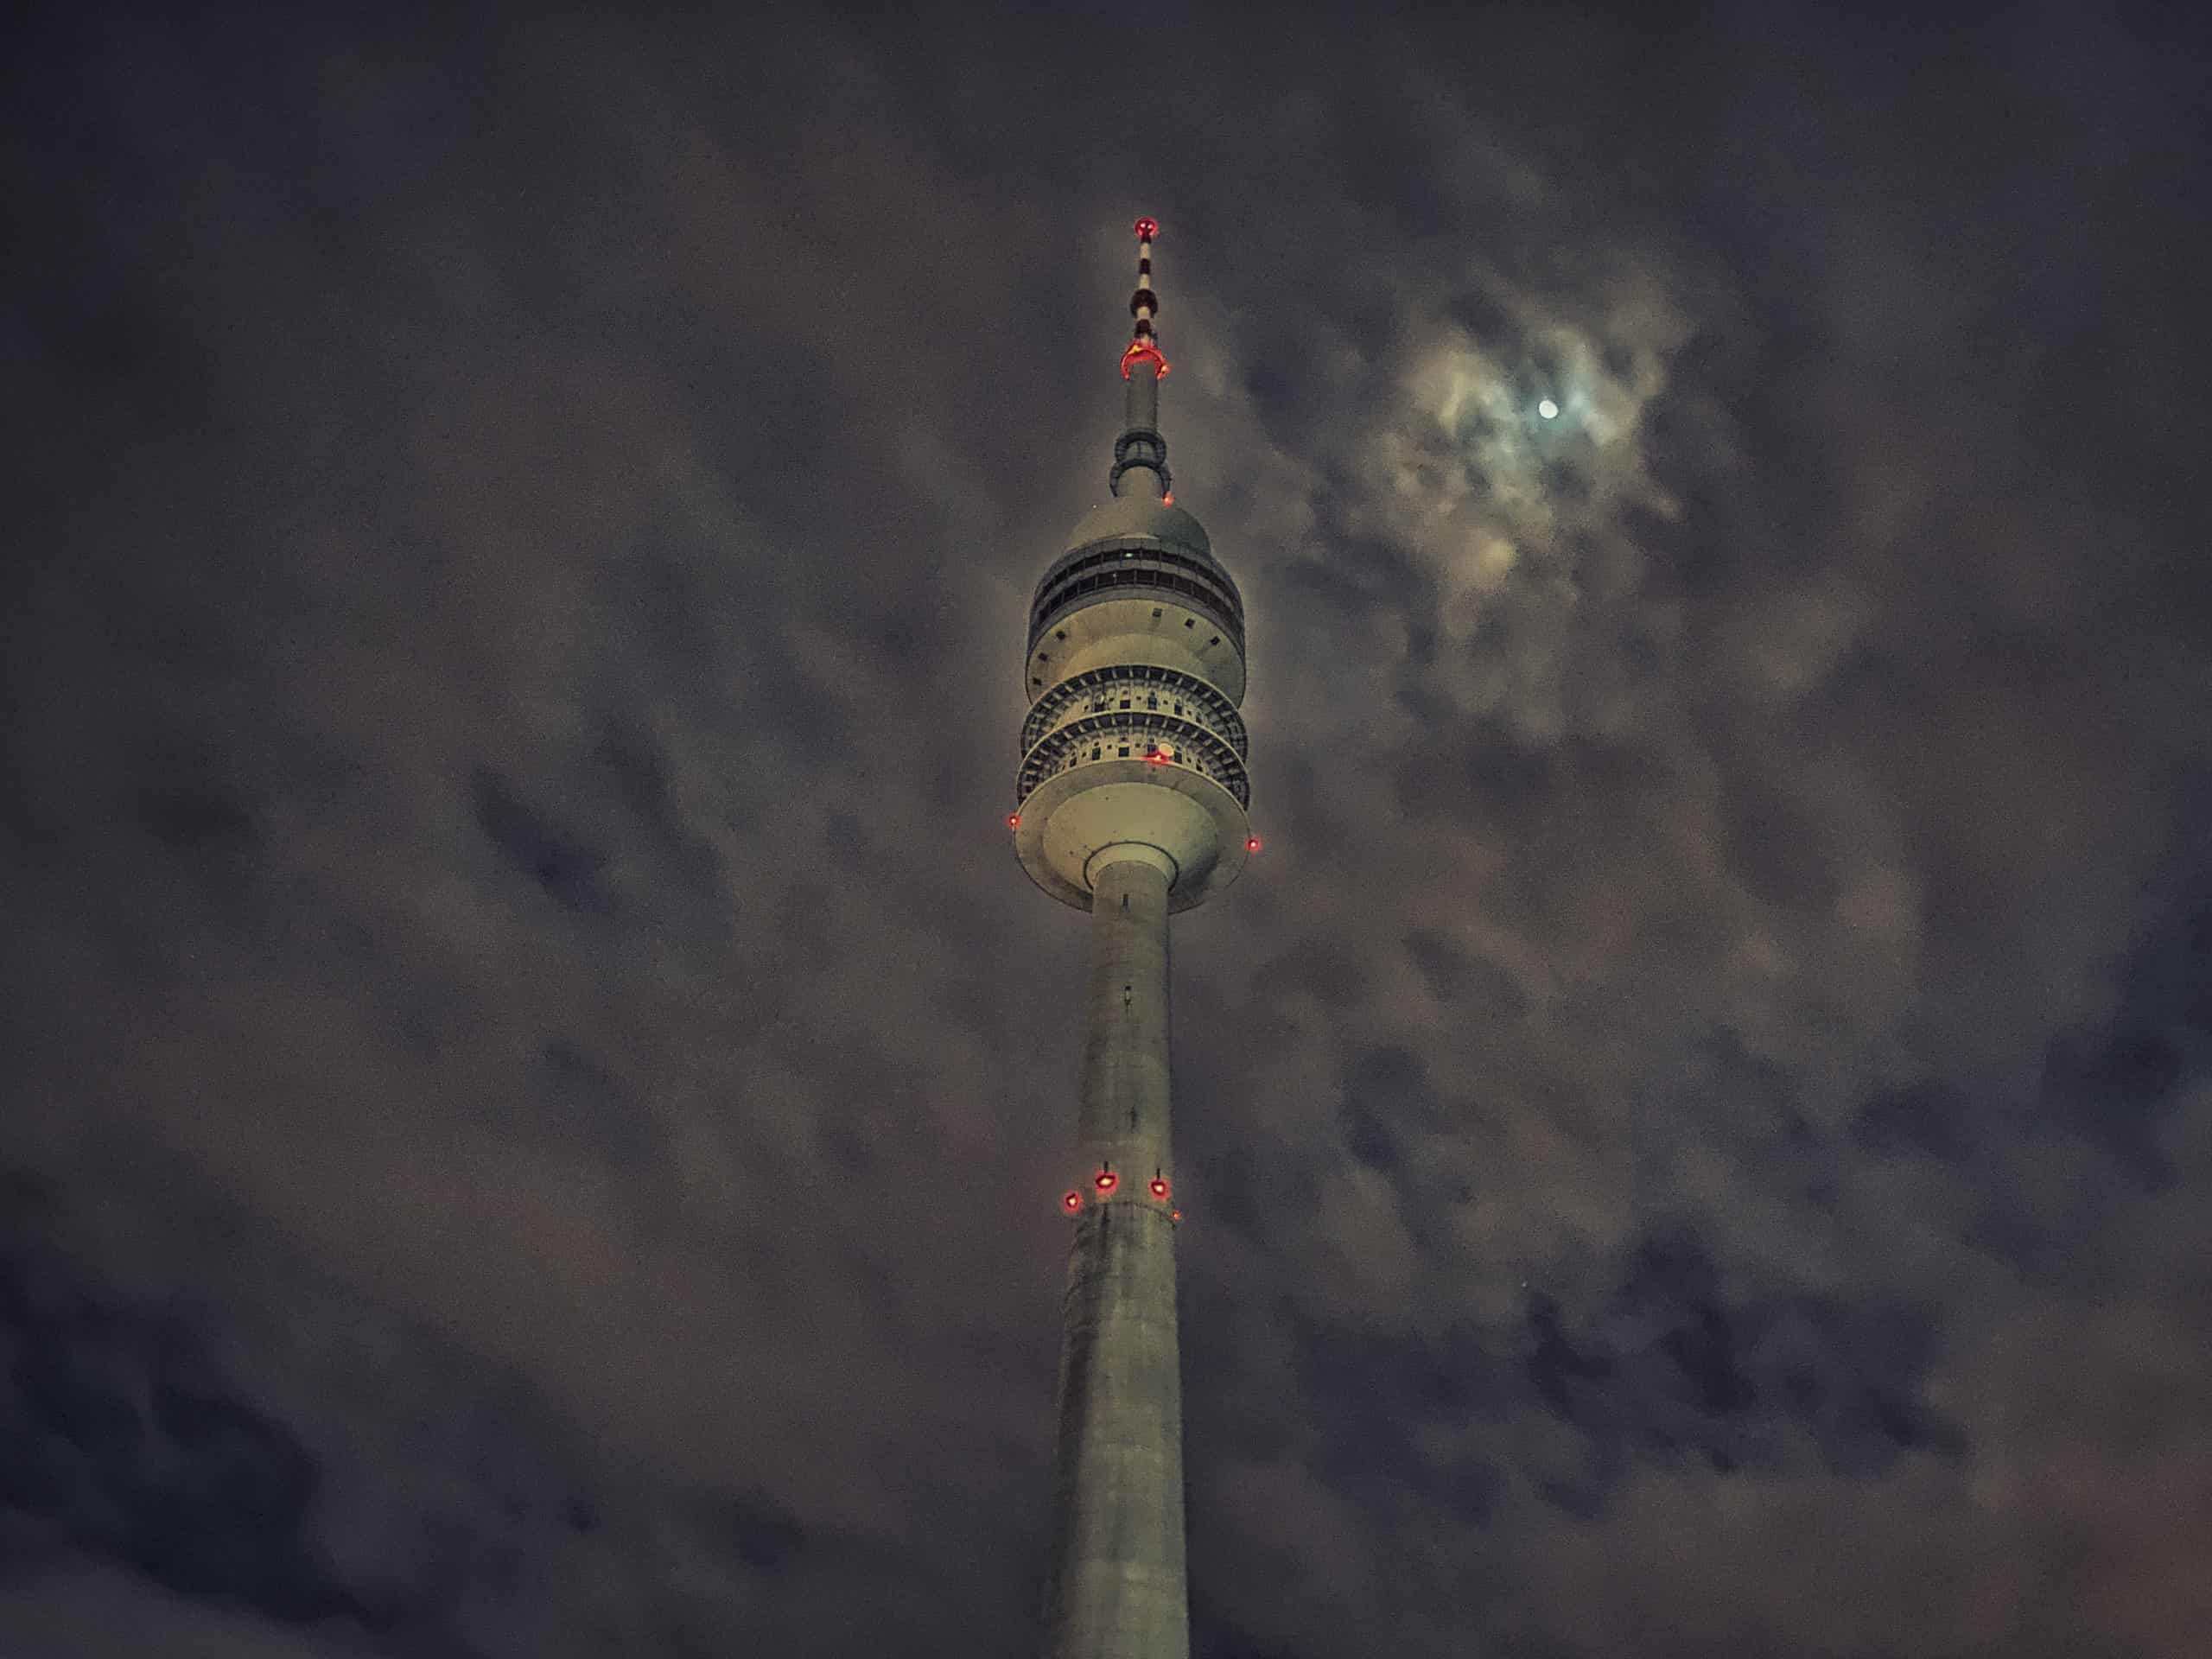 Olympiaturm at night 11.2019